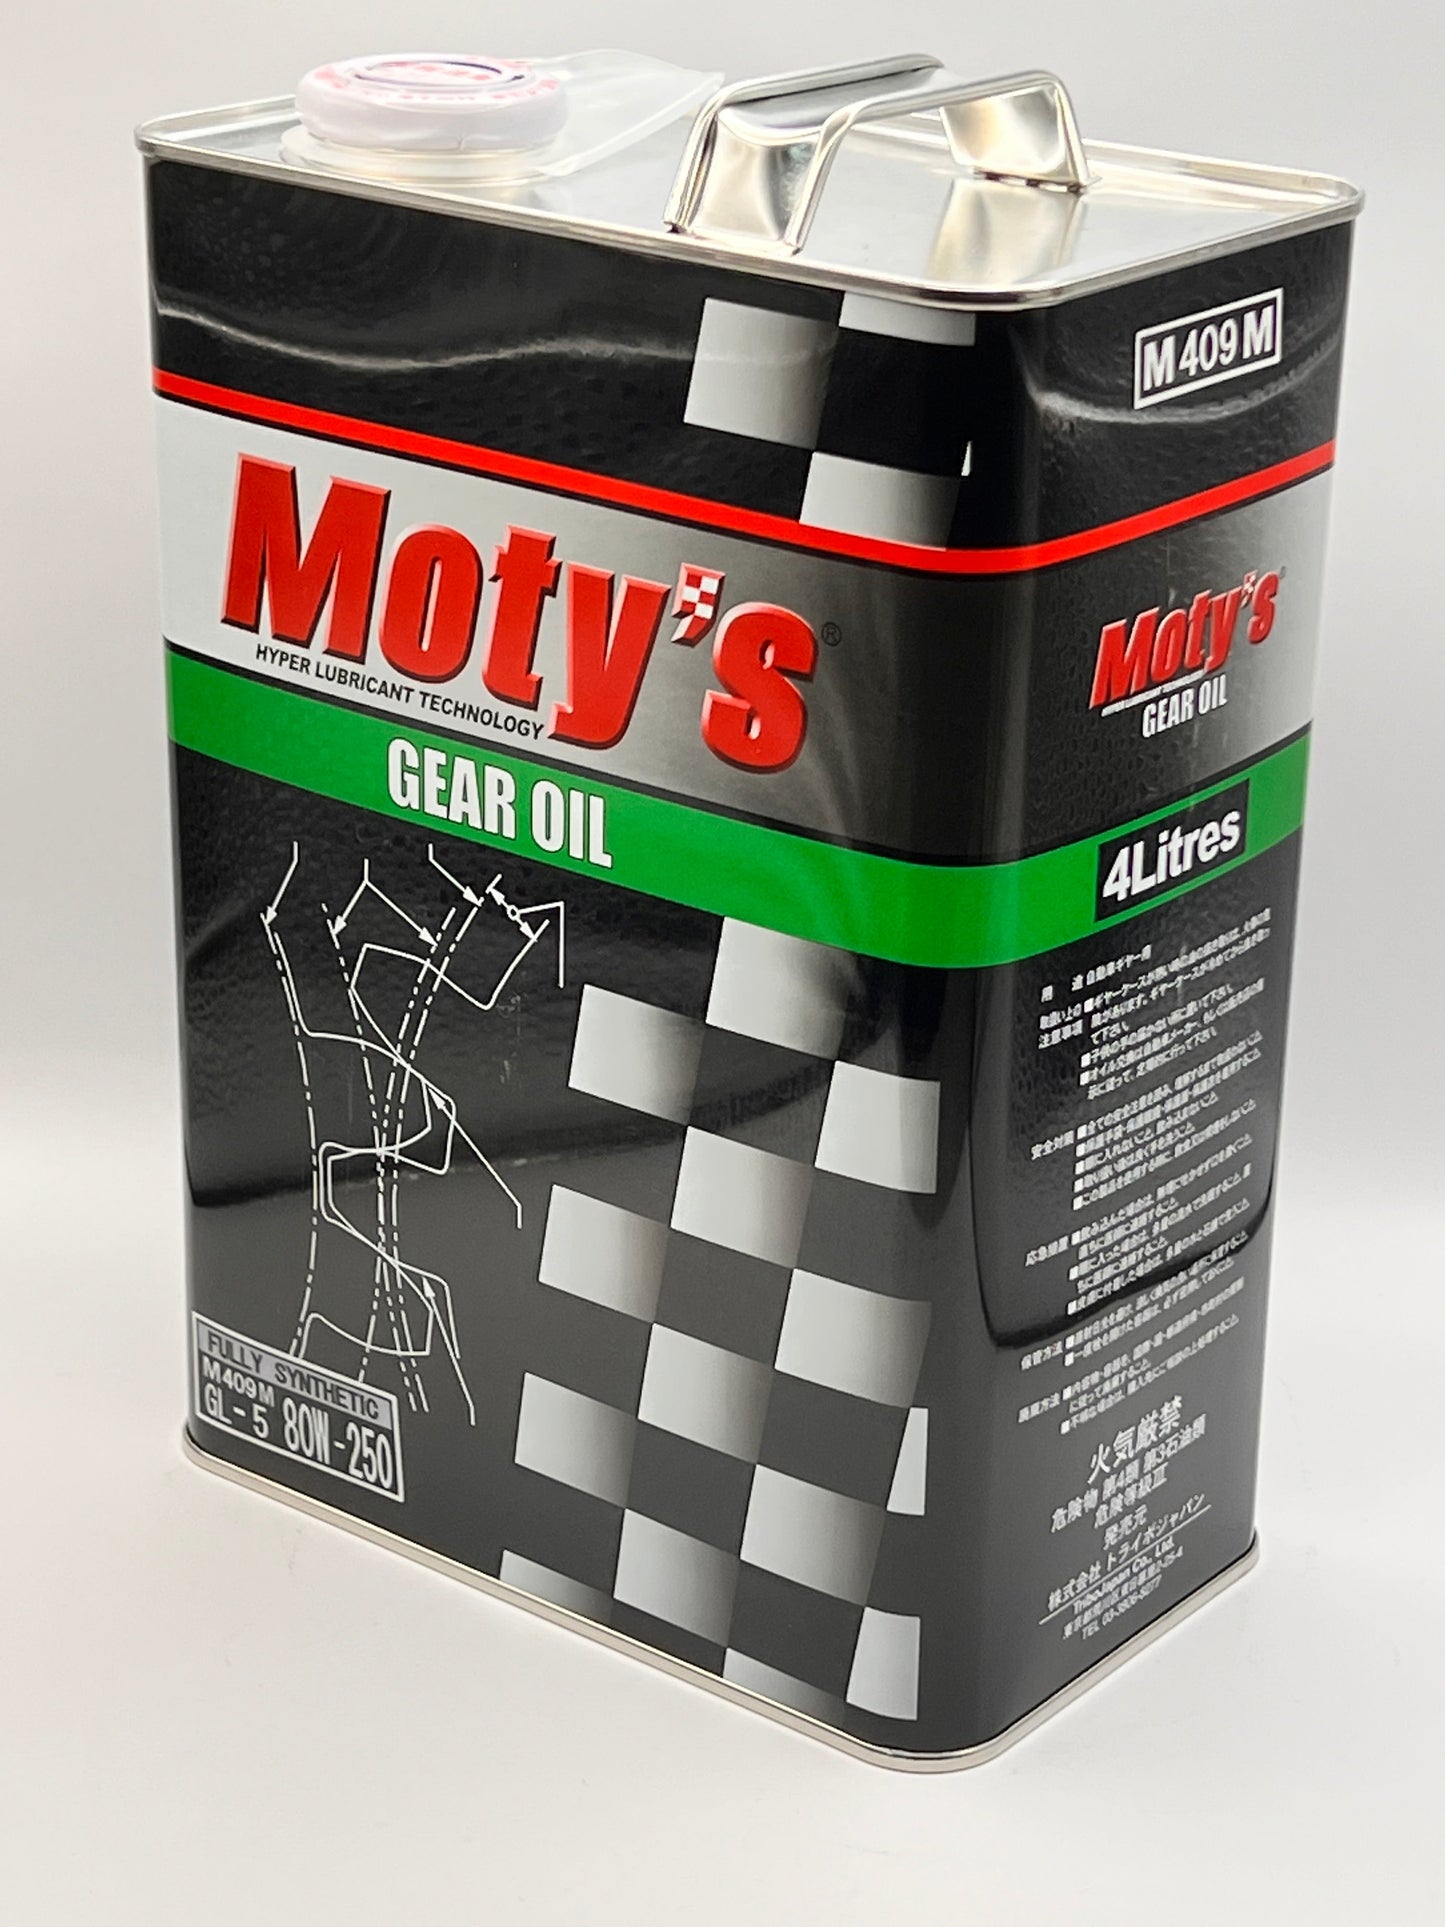 Moty's Gear Oil Full Synthetic M409M 80W-250 4 Litre Can